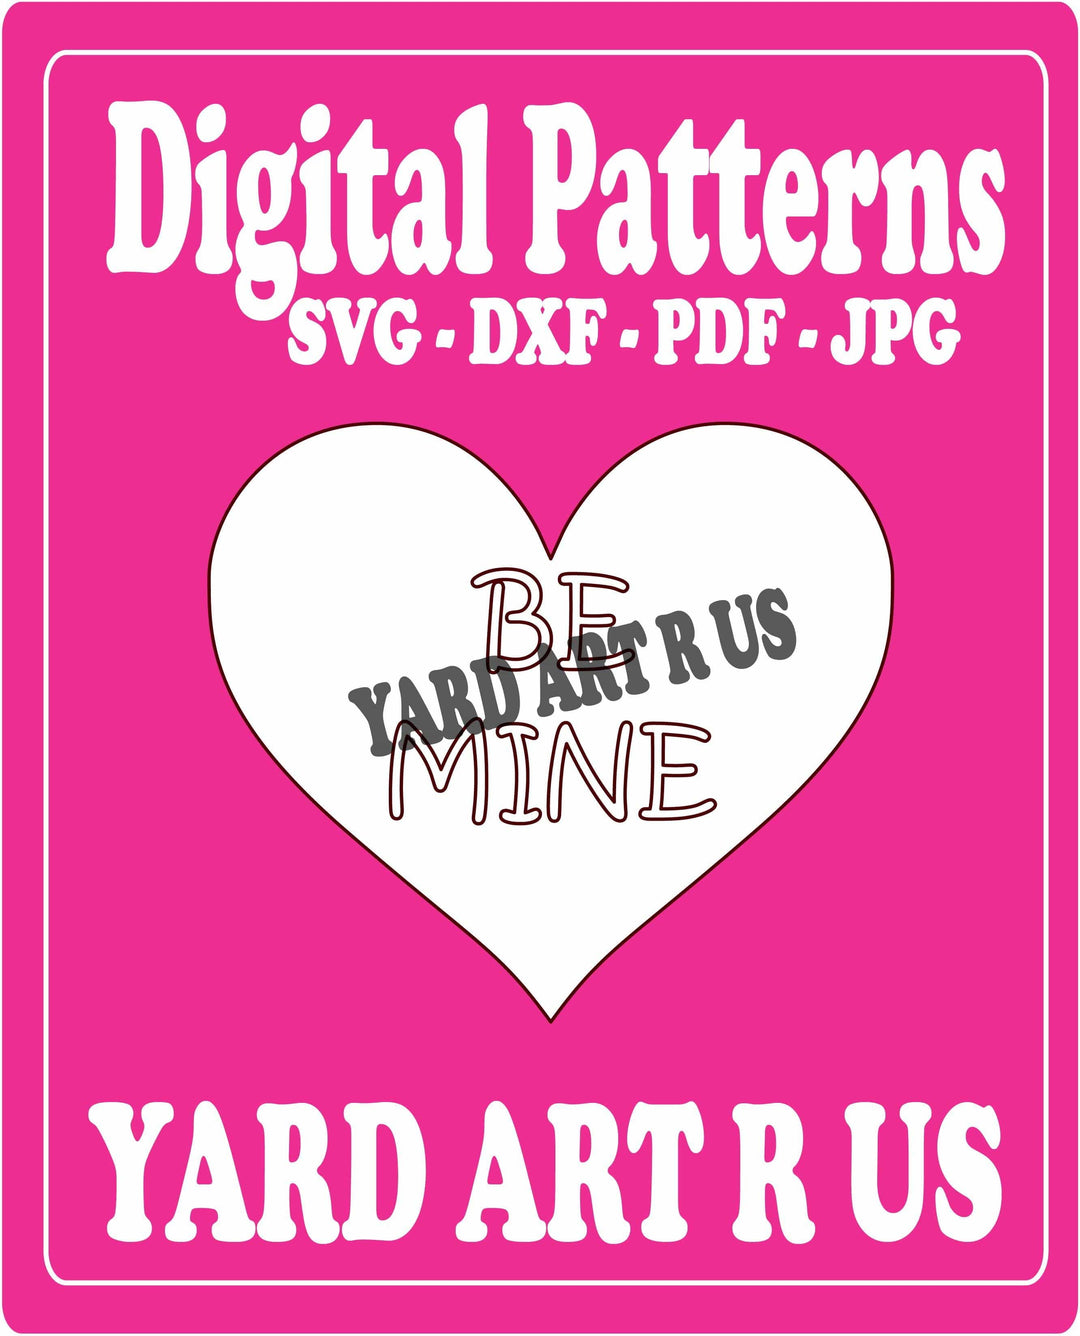 Be Mine digital pattern; SVG, DXF, PDF, and JPG file options